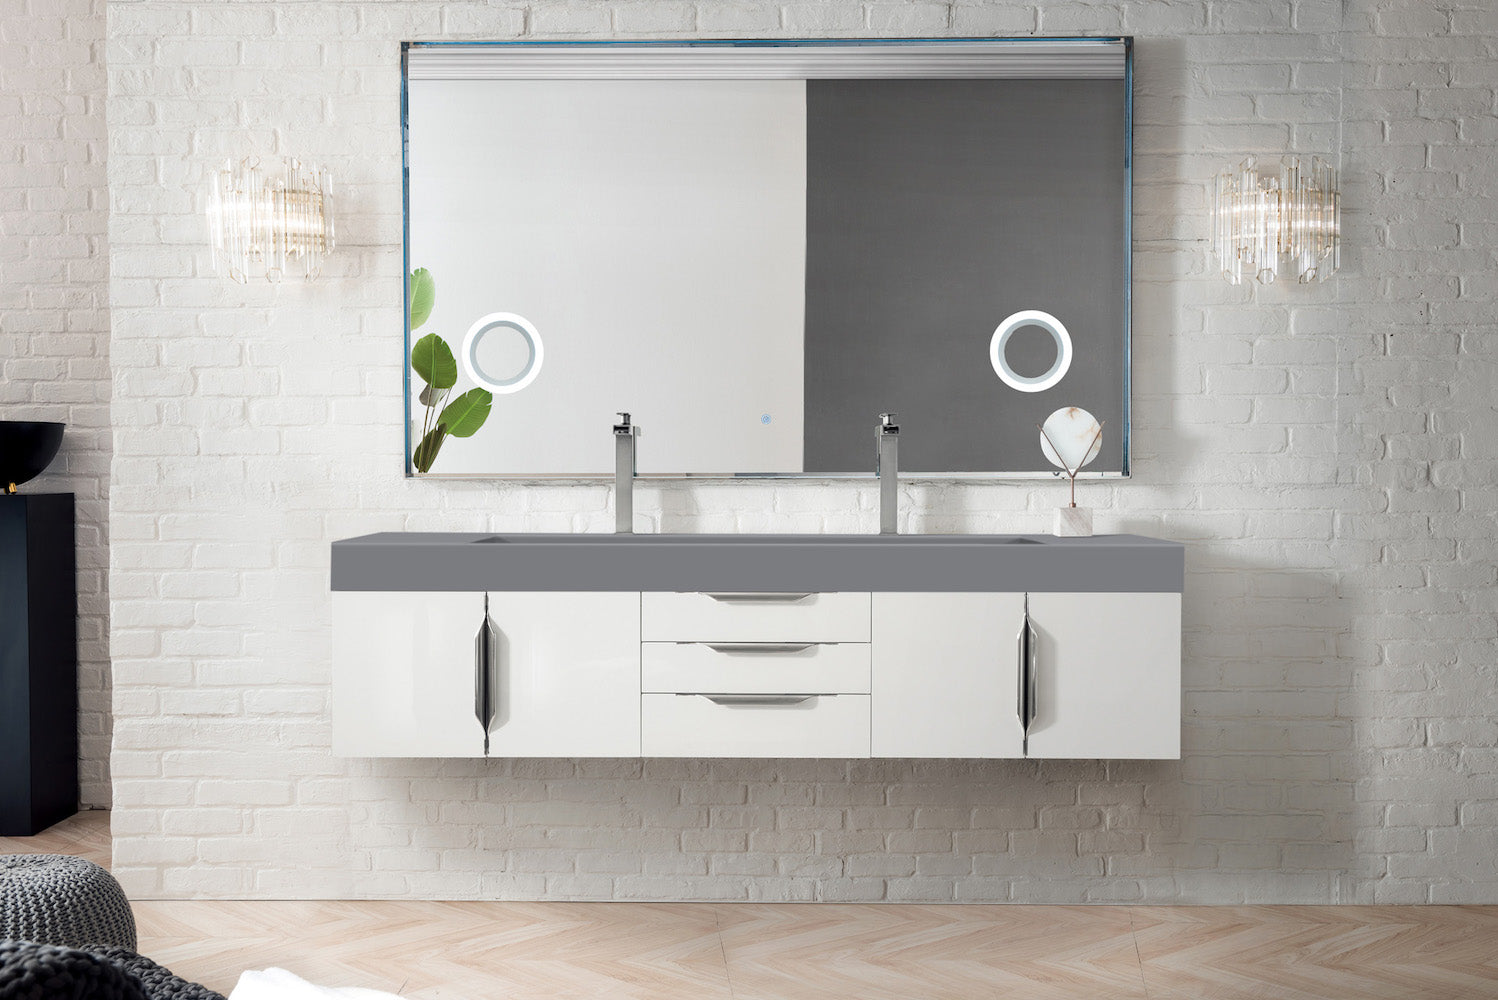 72" Mercer Island Double Sink Bathroom Vanity, Glossy White w/ Brushed Nickel